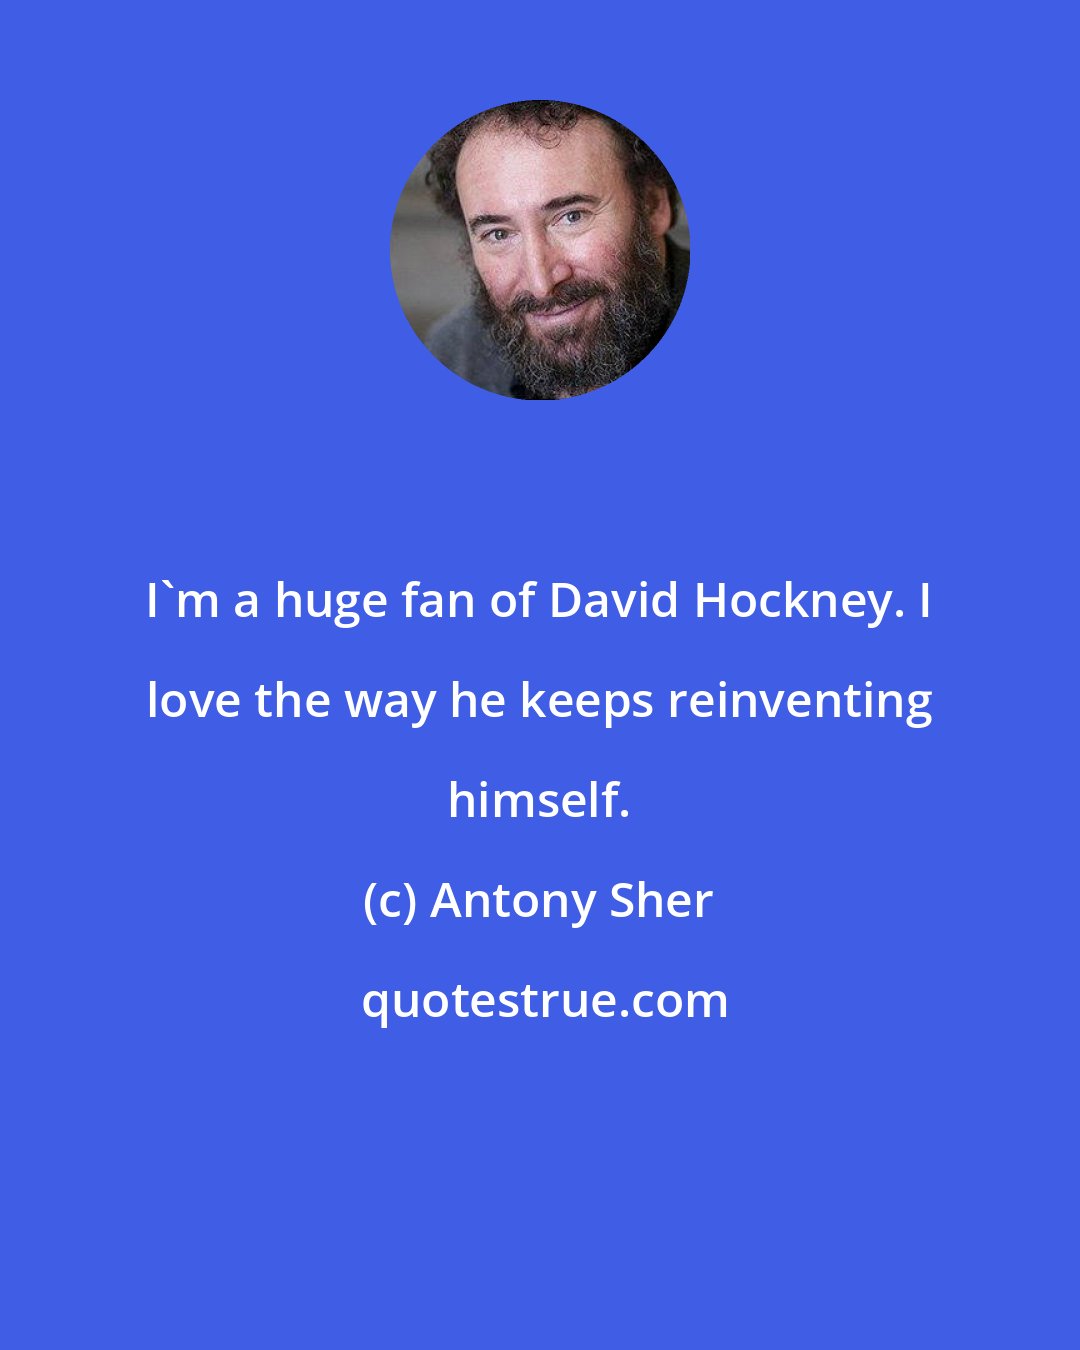 Antony Sher: I'm a huge fan of David Hockney. I love the way he keeps reinventing himself.